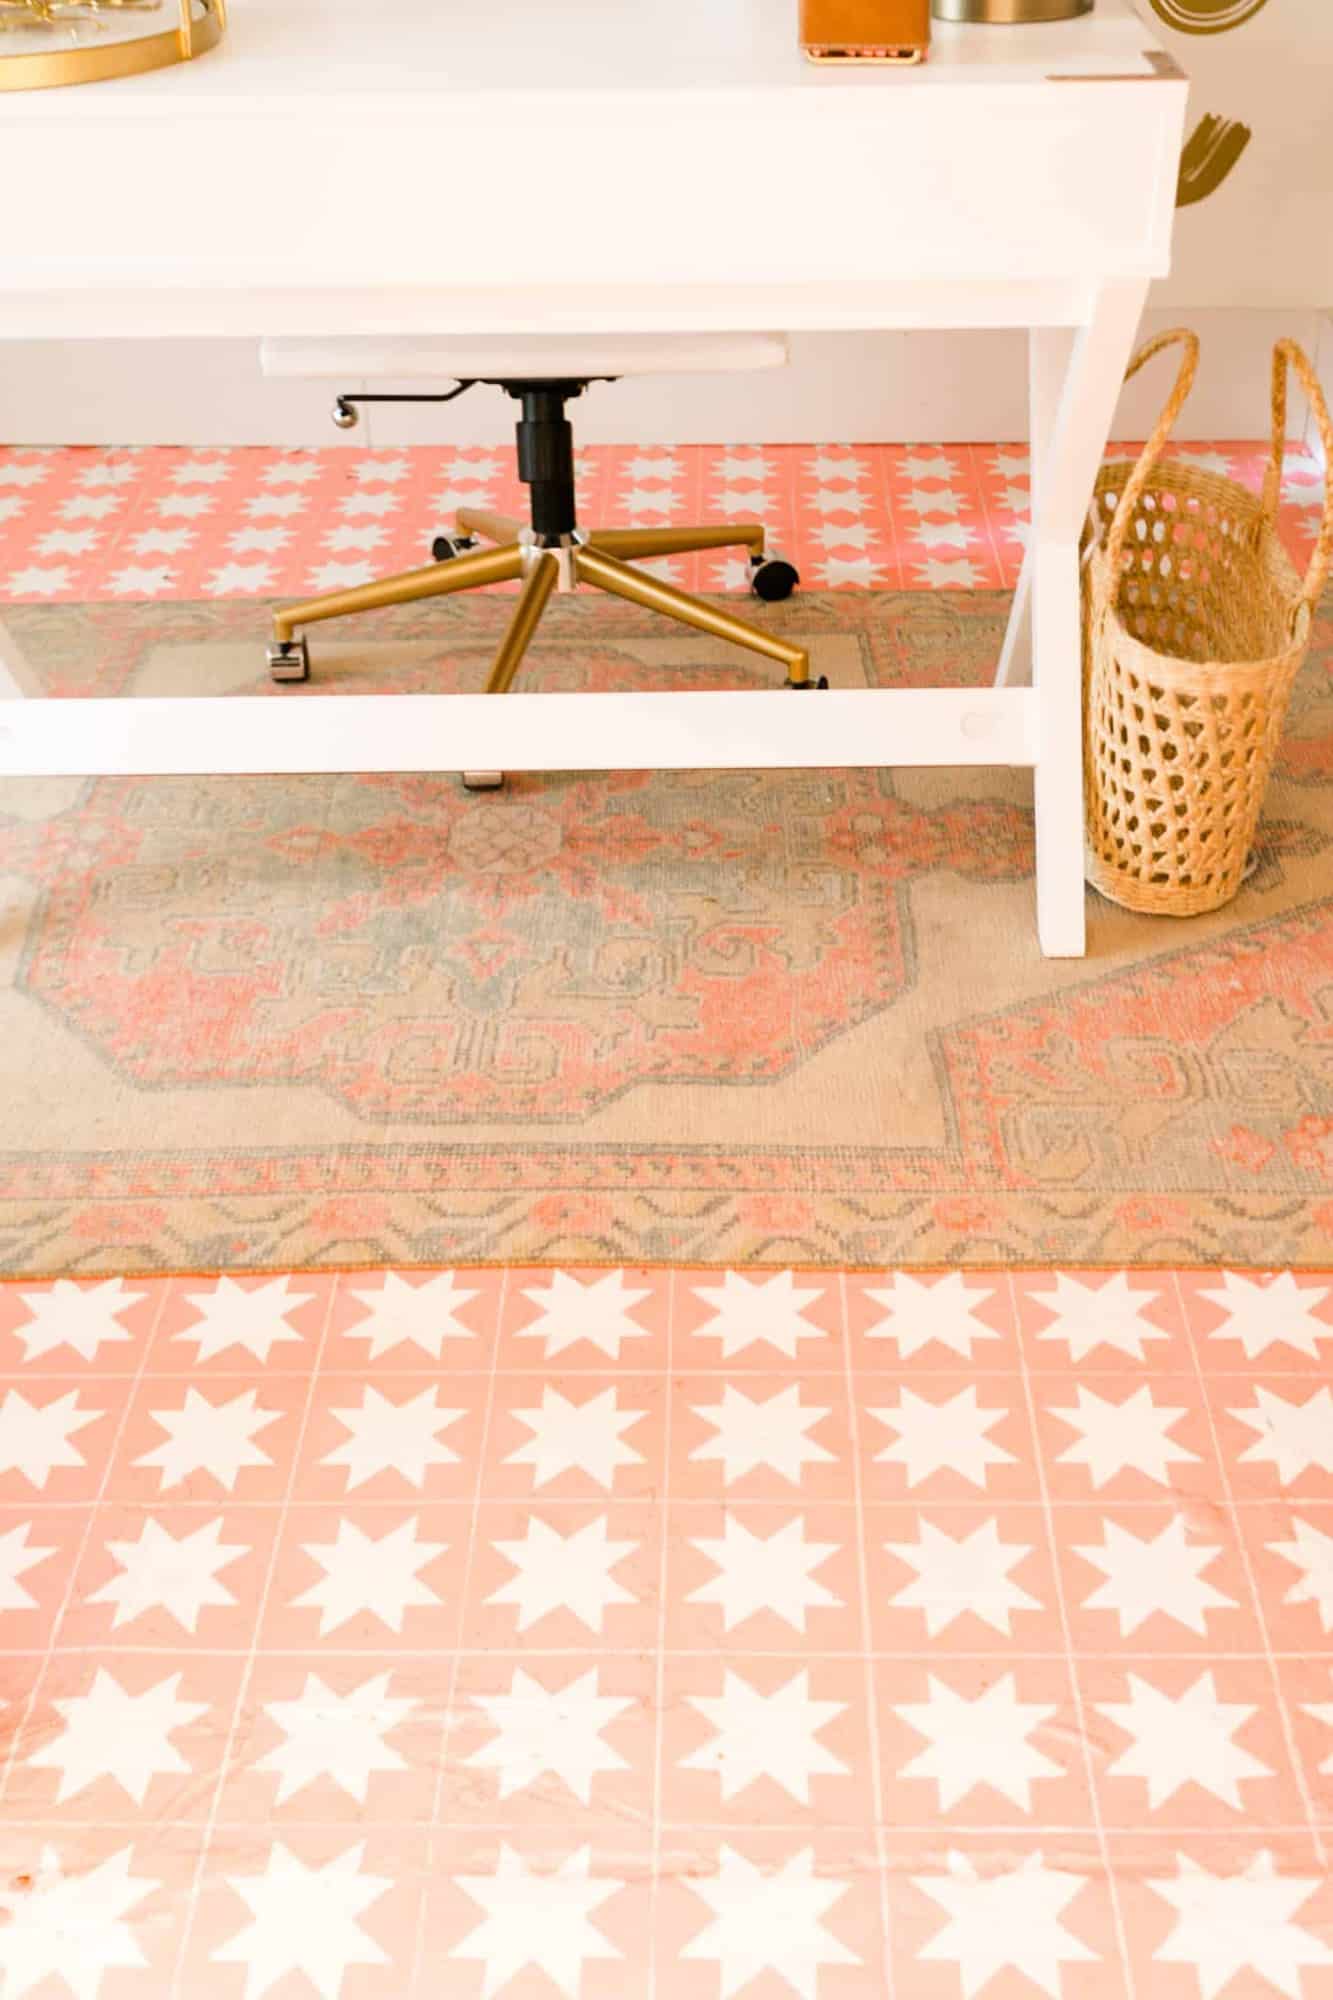 lantai ubin bintang dengan permadani antik